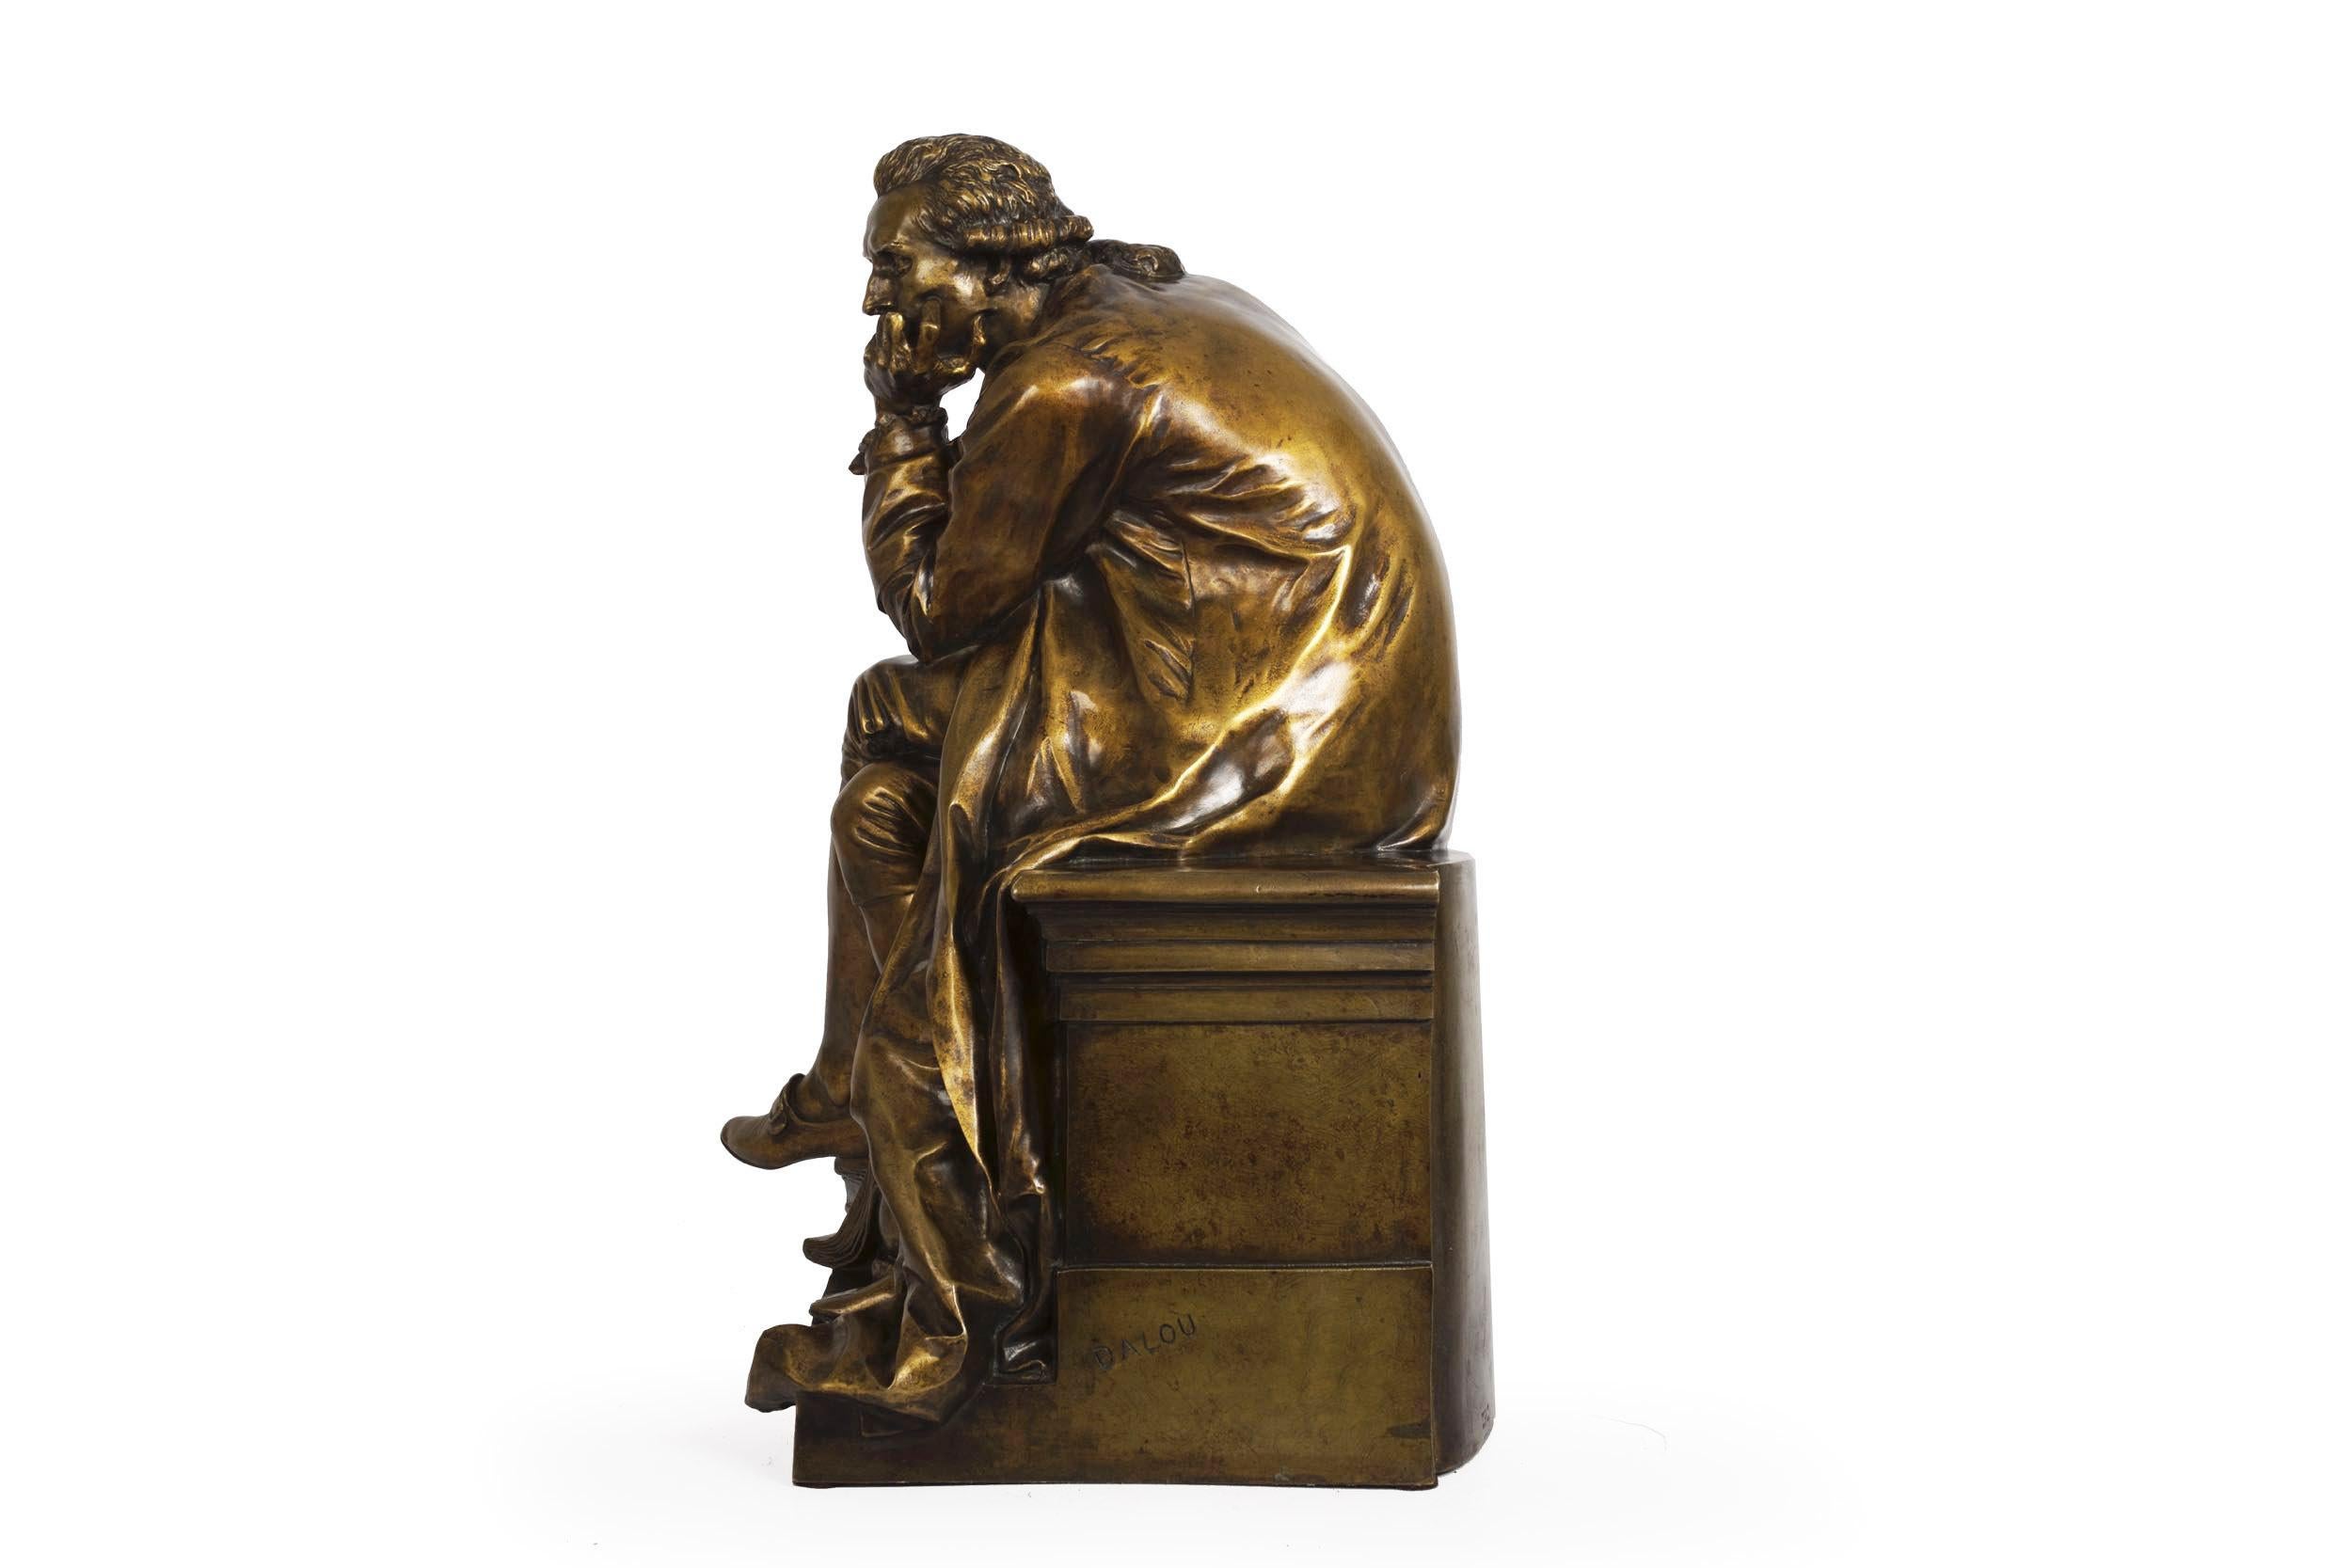 French Bronze Sculpture of “Antoine Laurent Lavoisier” by Aime Jules Dalou